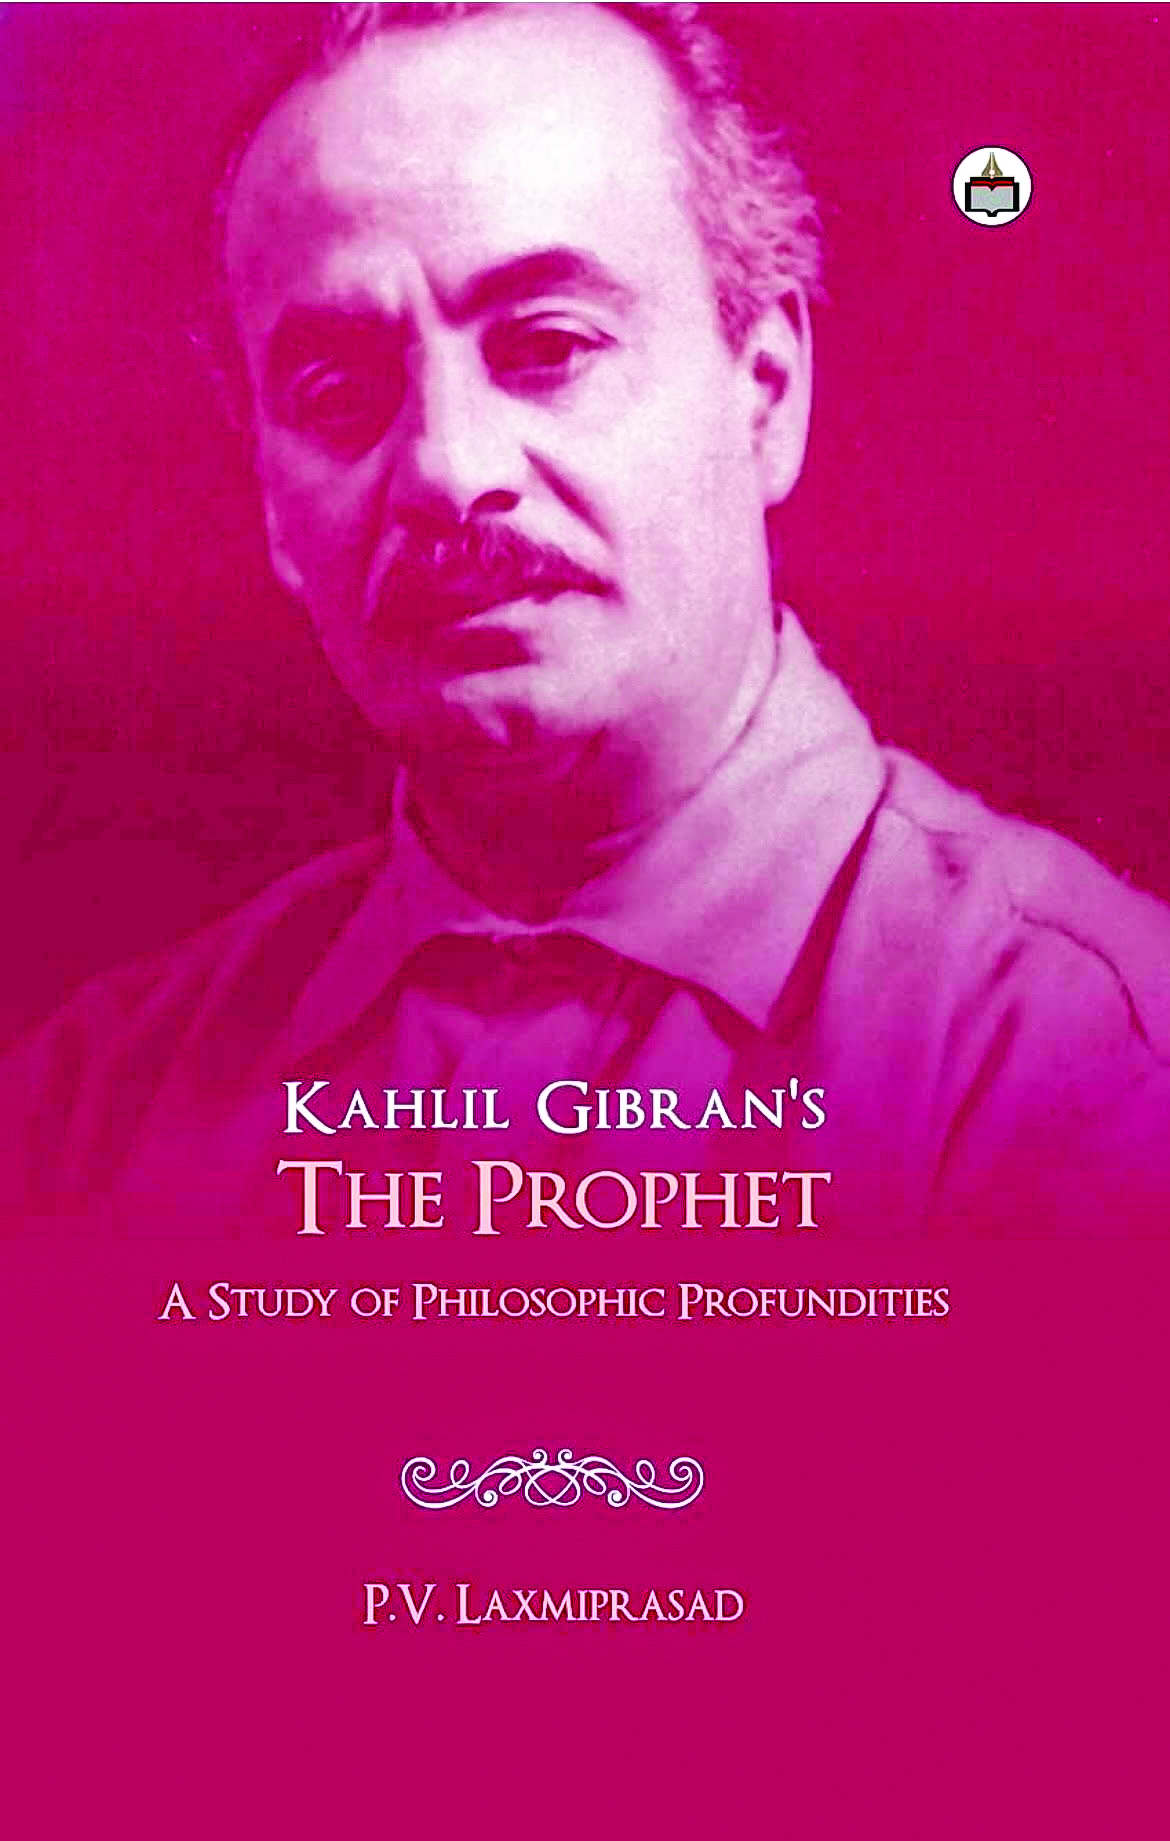 Revisiting Kahlil Gibran’s The Prophet 